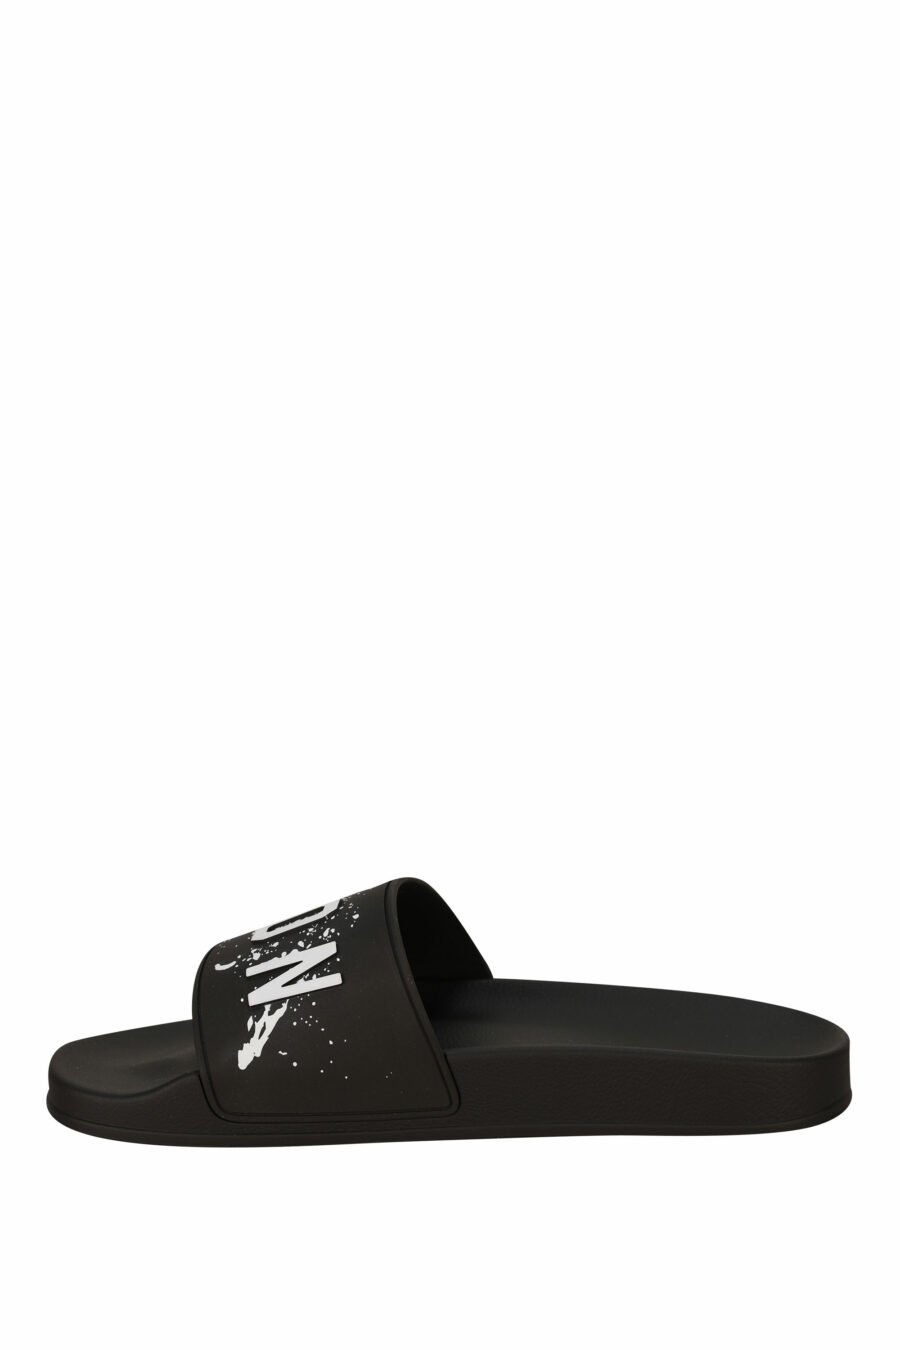 Black rubber flip flops with "icon splash" logo - 8055777295236 2